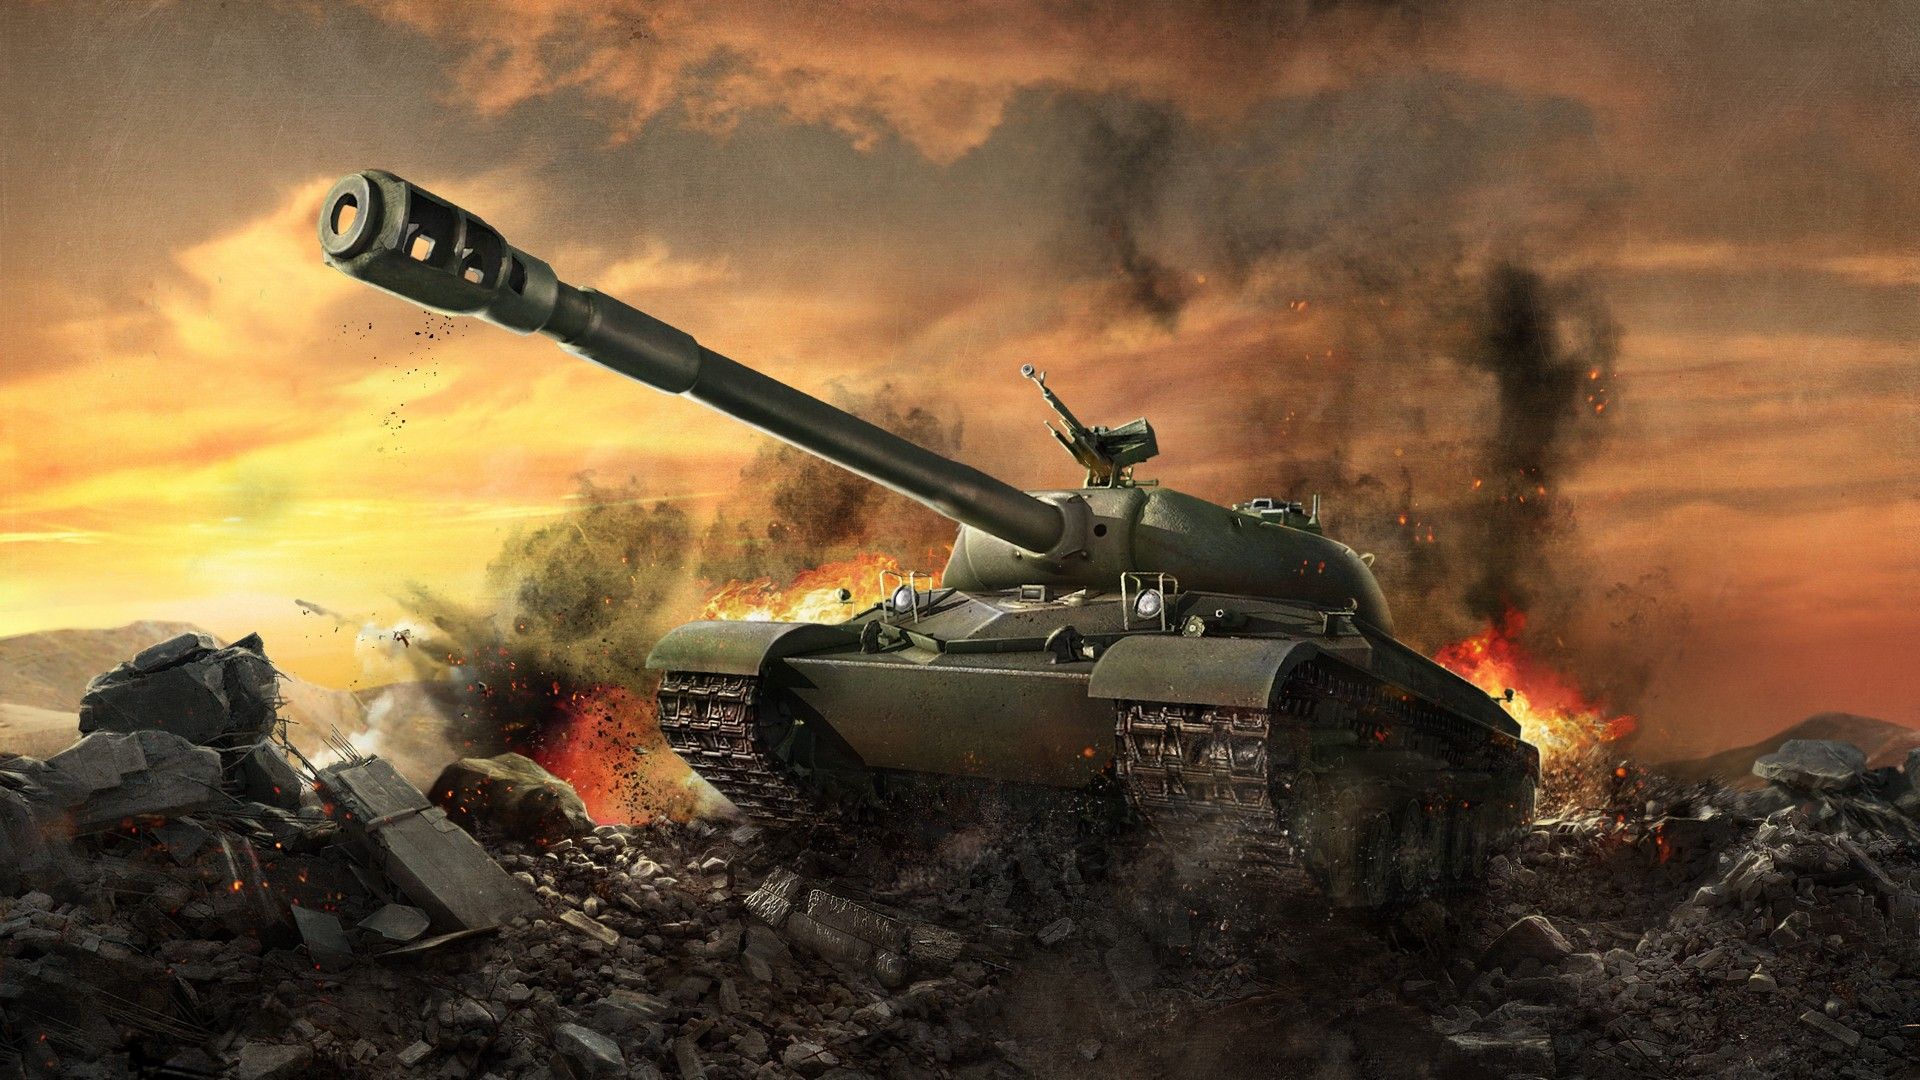 HD T29 wallpaper. Tank wallpaper, World of tanks, War thunder